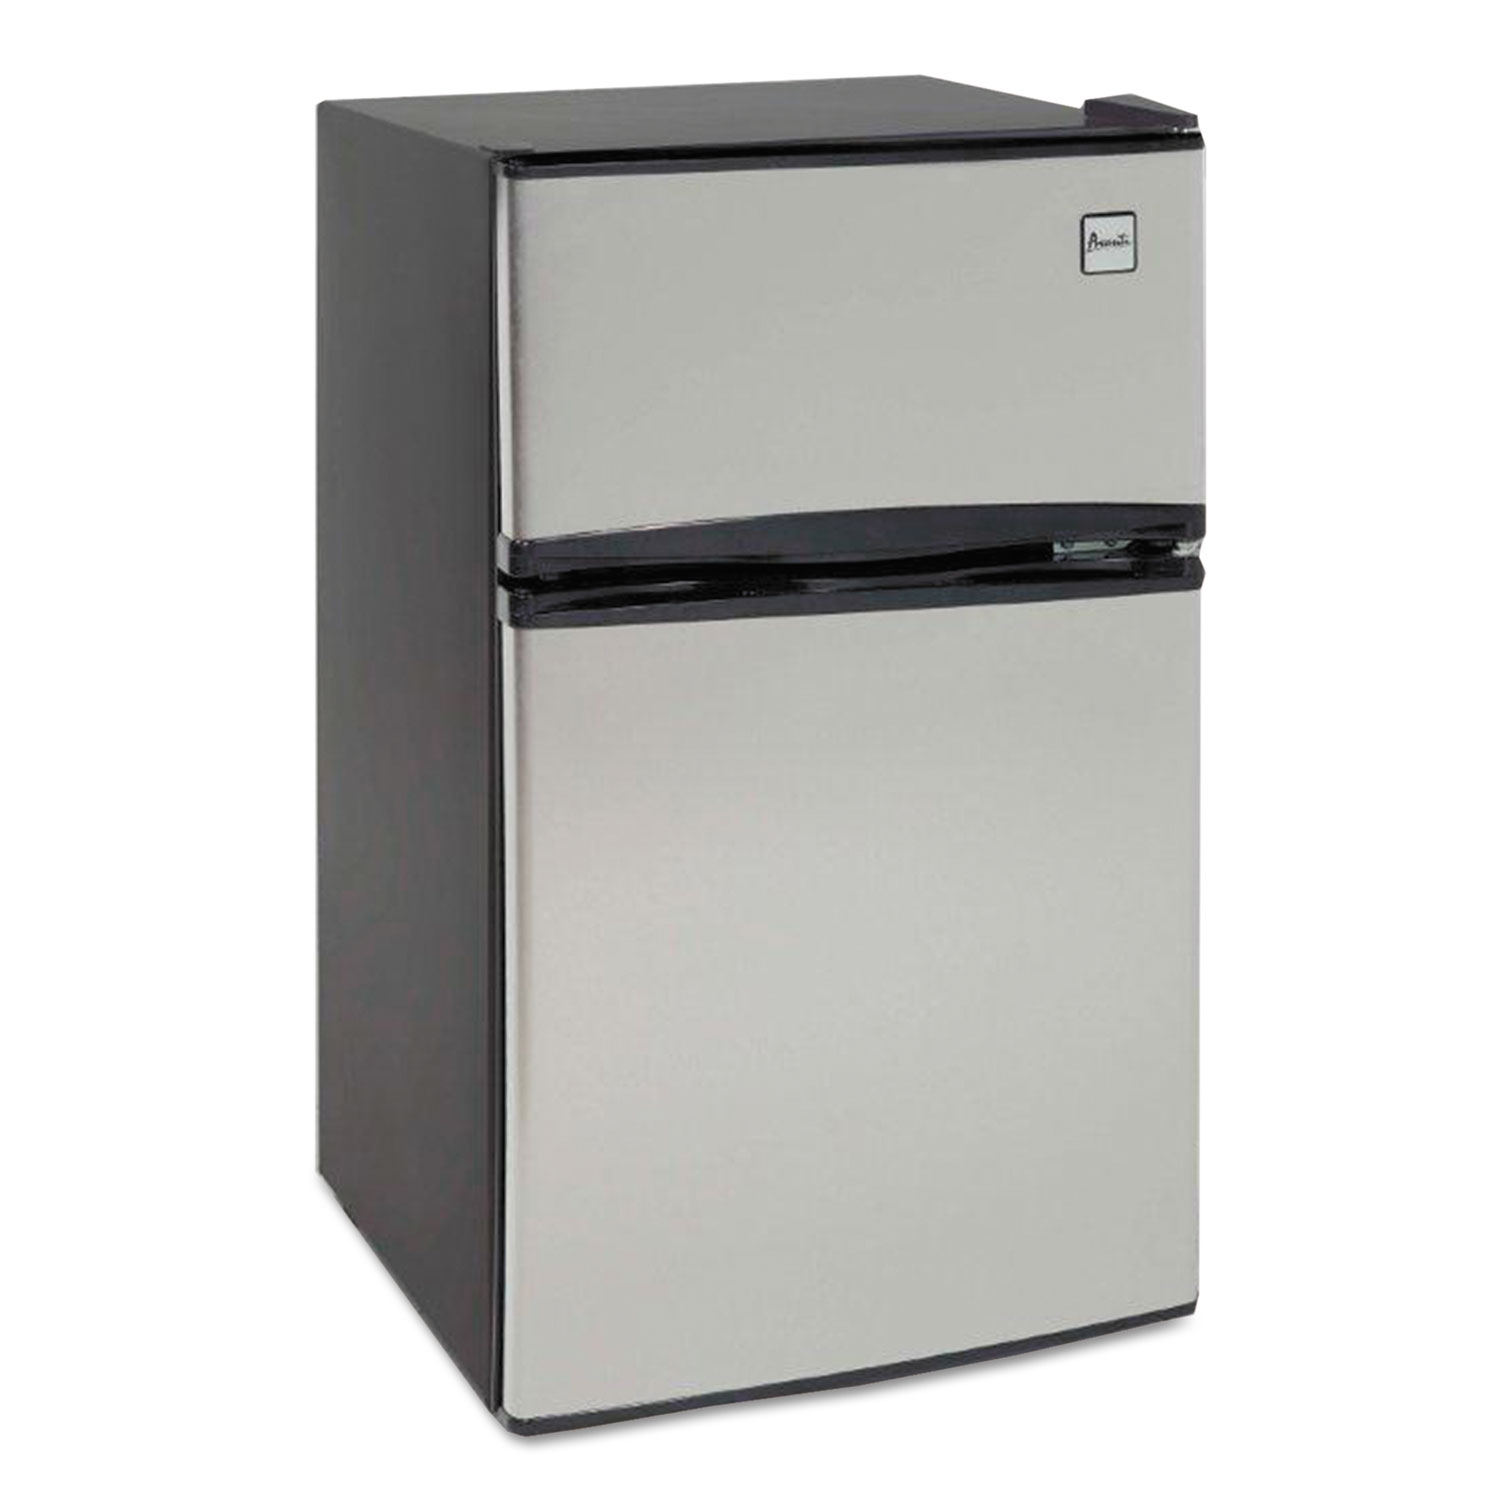  Avanti RA31B3S Counter-Height 3.1 Cu. Ft Two-Door Refrigerator/Freezer, Black/Stainless Steel (AVARA31B3S) 